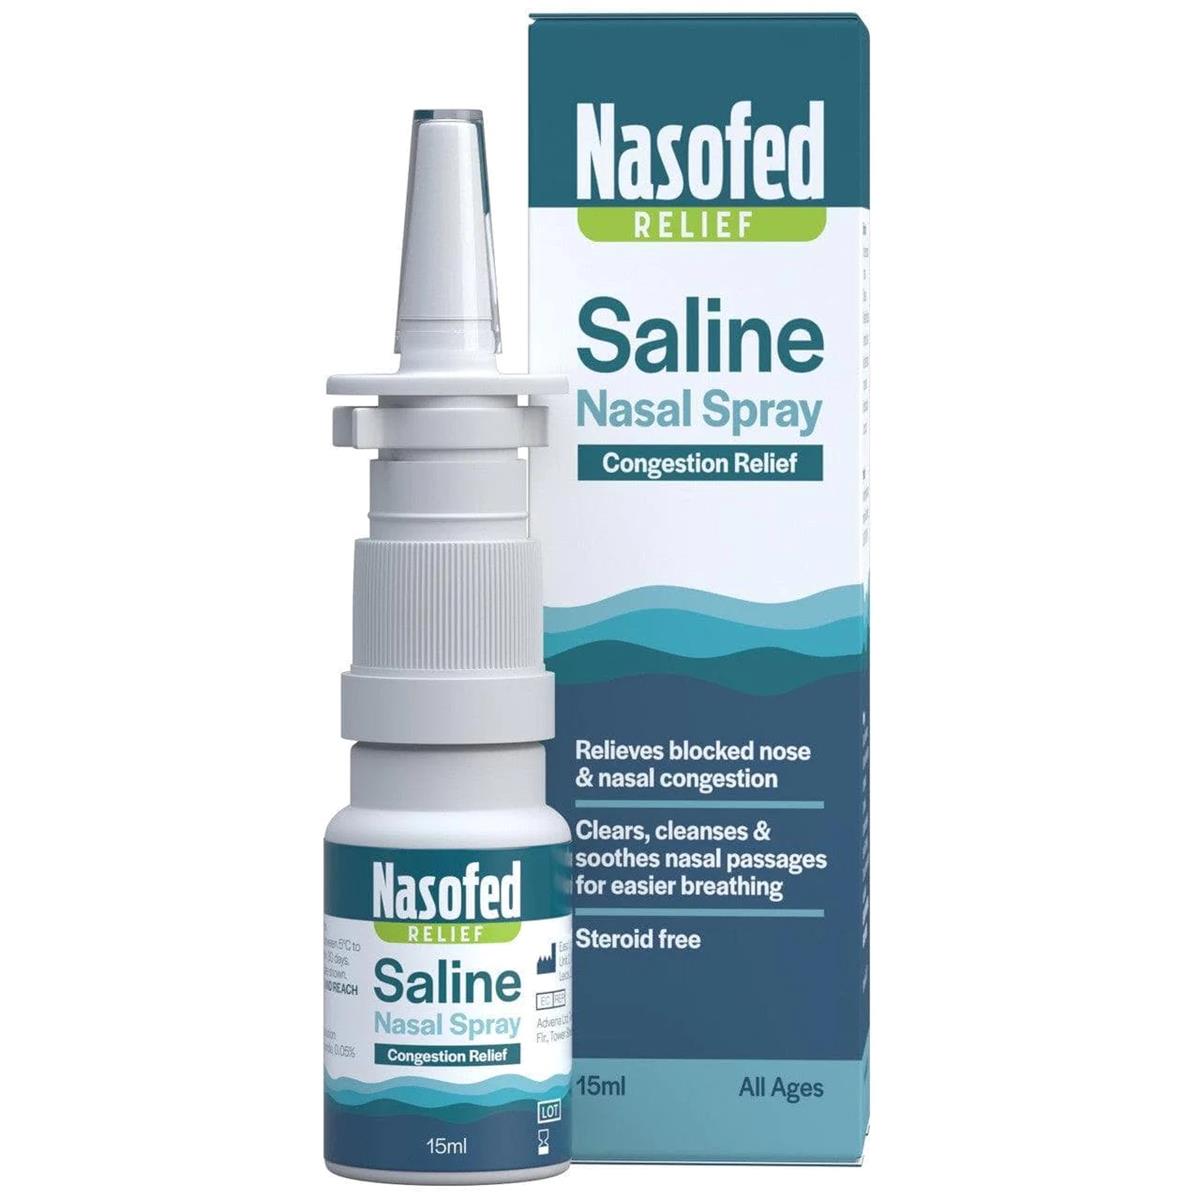 Nasofed Relief Saline Nasal Spray